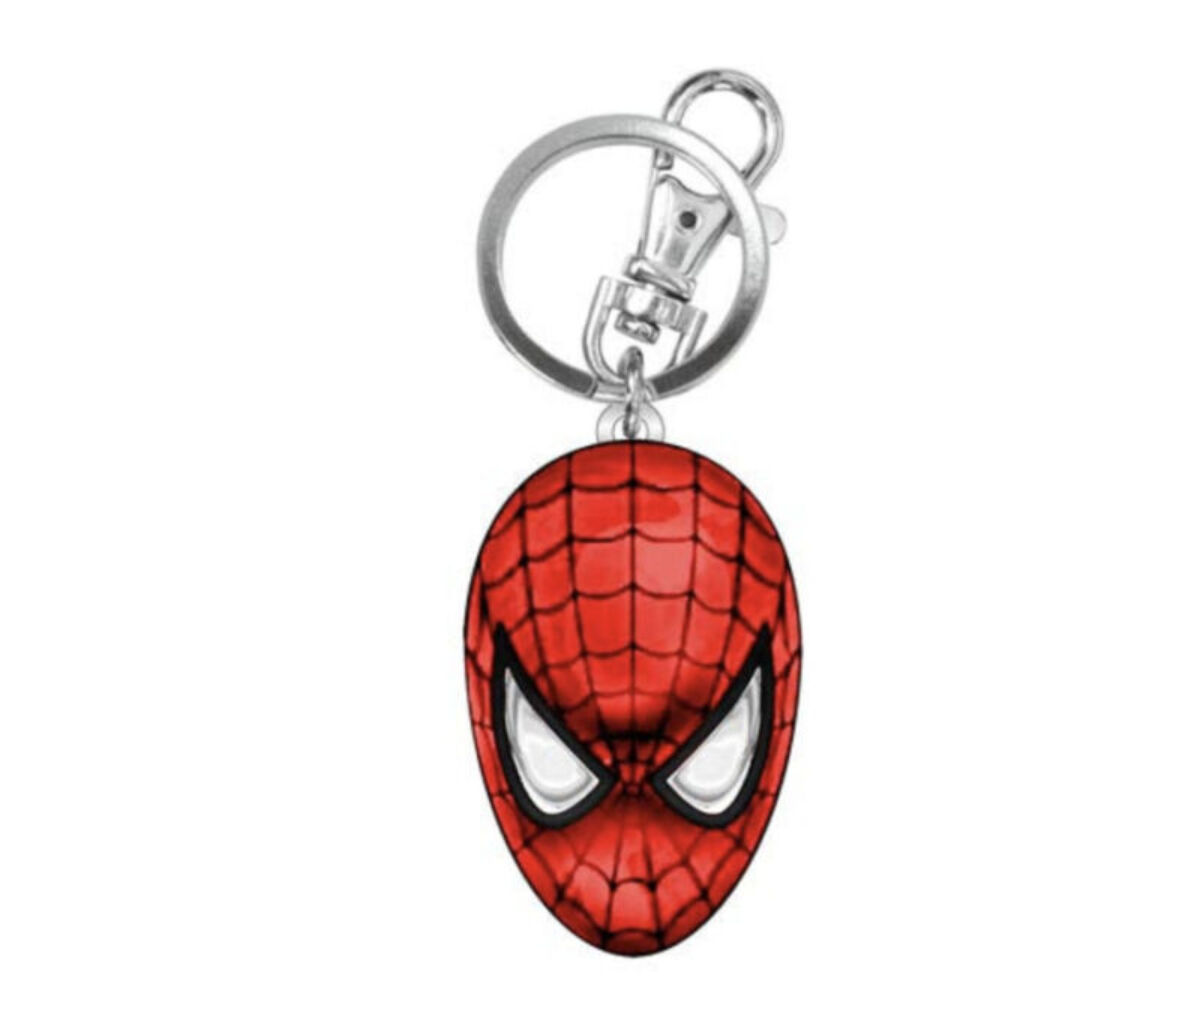 Avengers: Endgame Series 2 Figural Key Chain Display Case